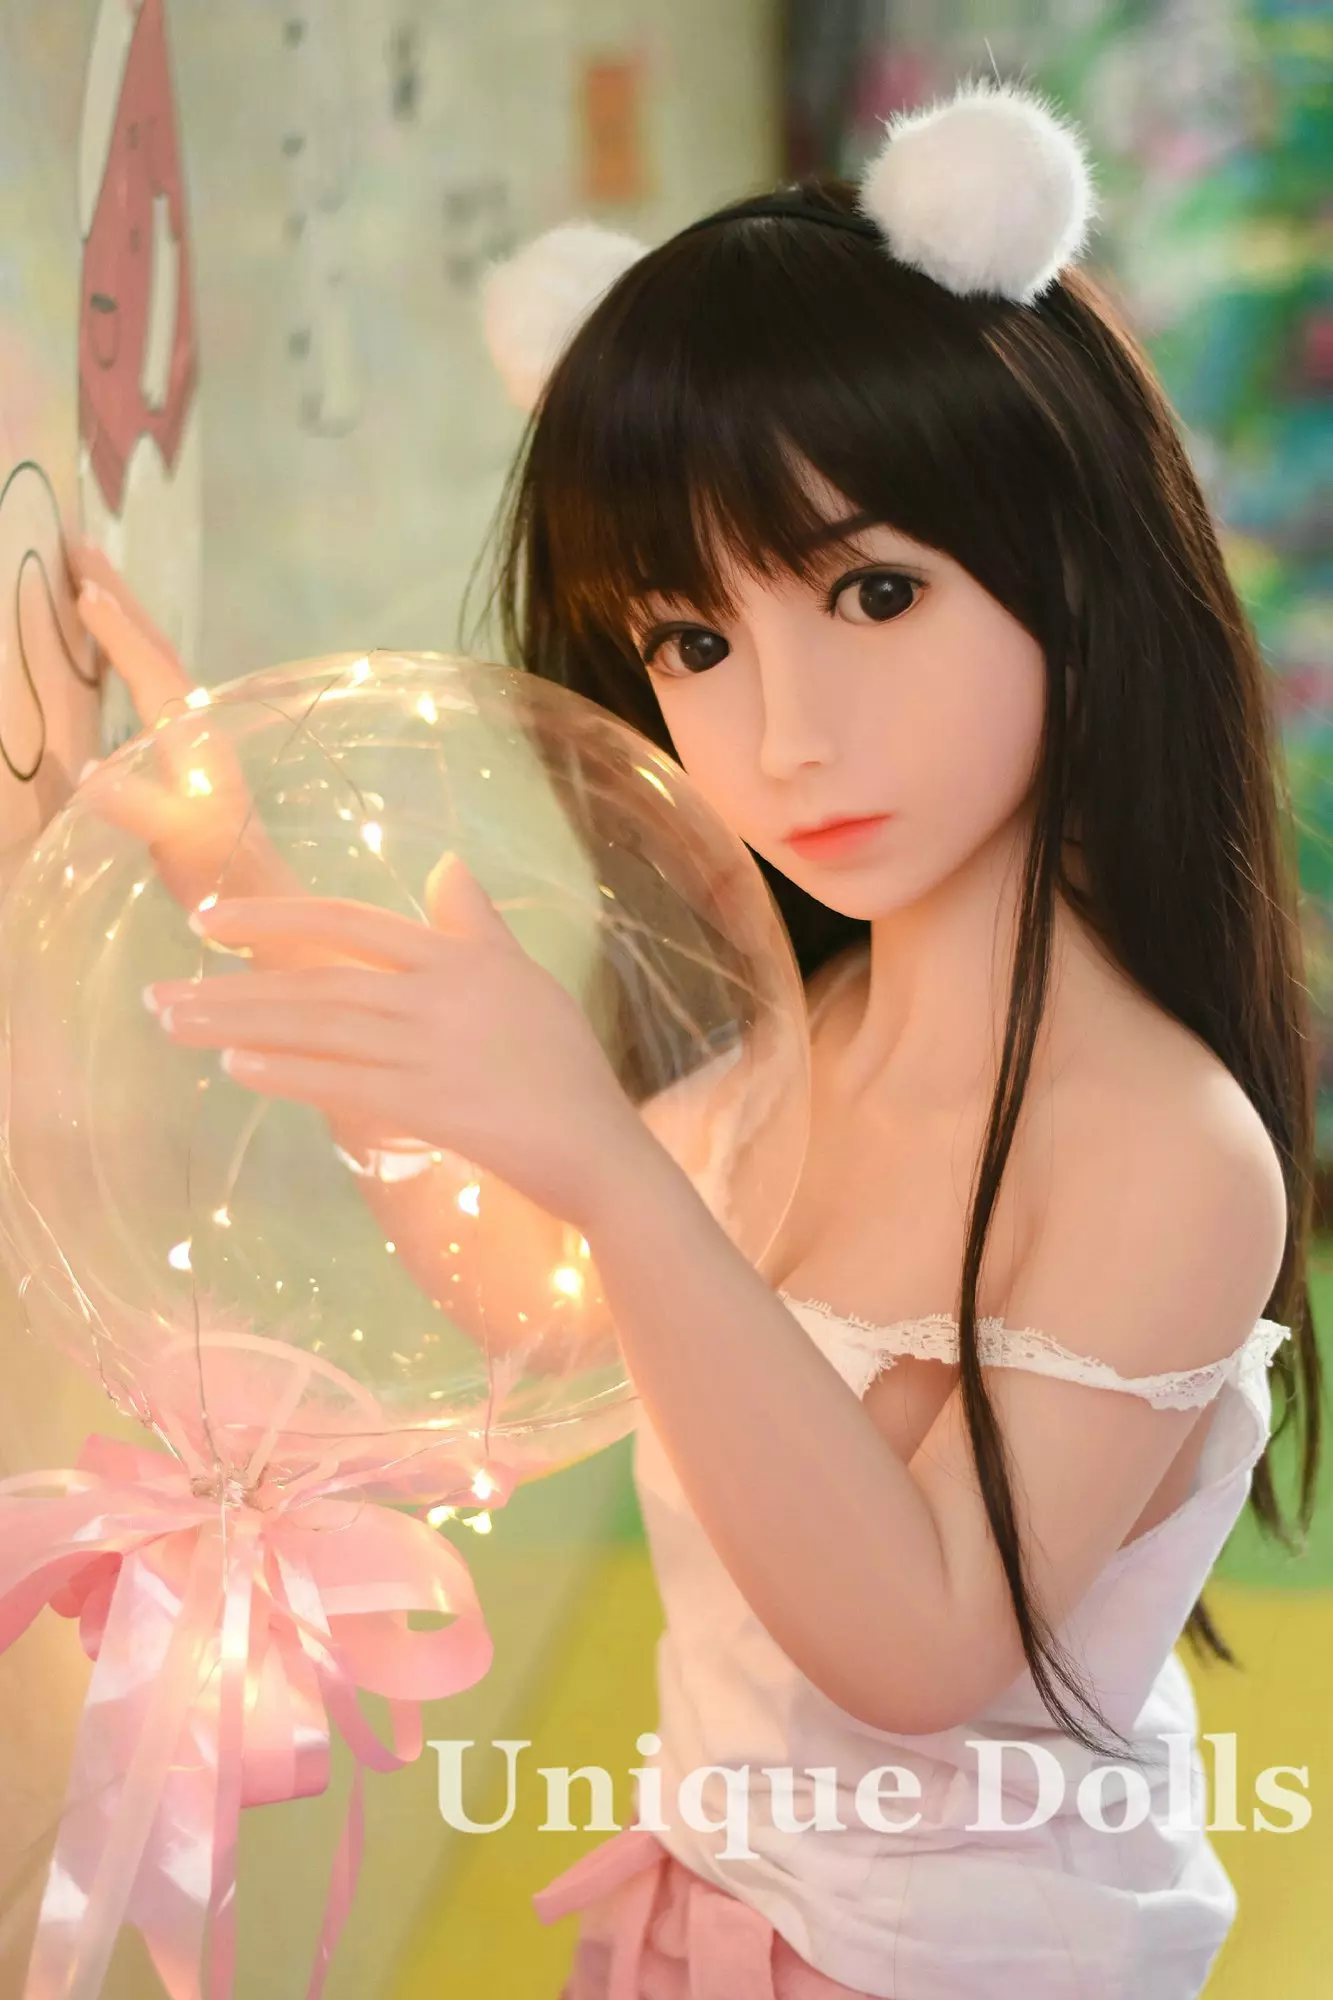 AXB Doll 115cm A75# TPE ANIME LOVE DOLL Mini SIZE SEX DOLLS